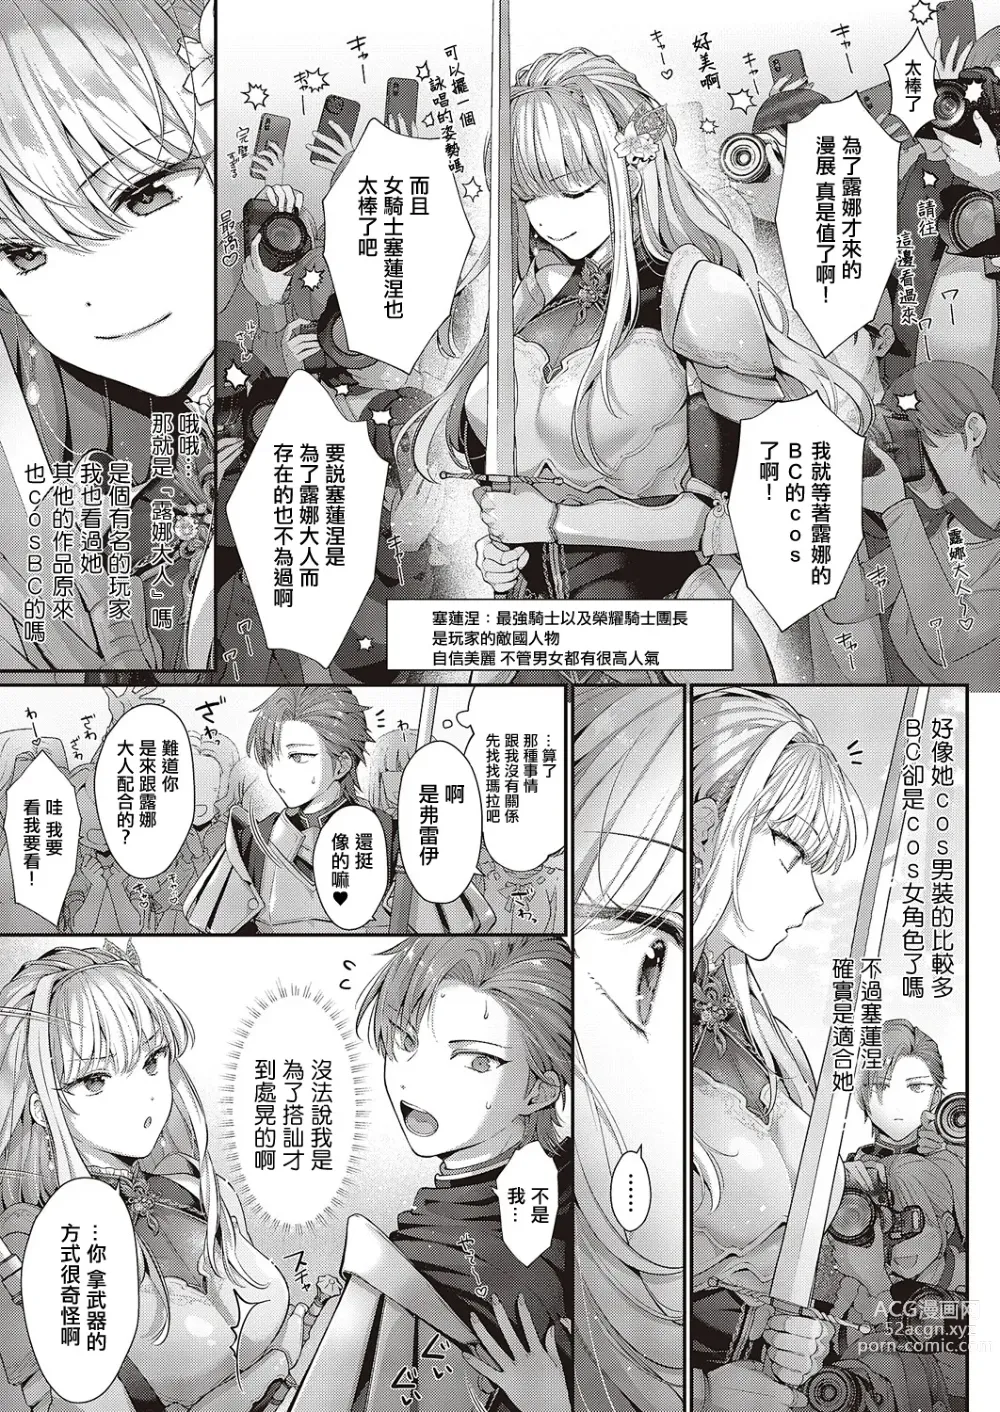 Page 3 of manga 解讀不同也能影響守備範圍嗎?